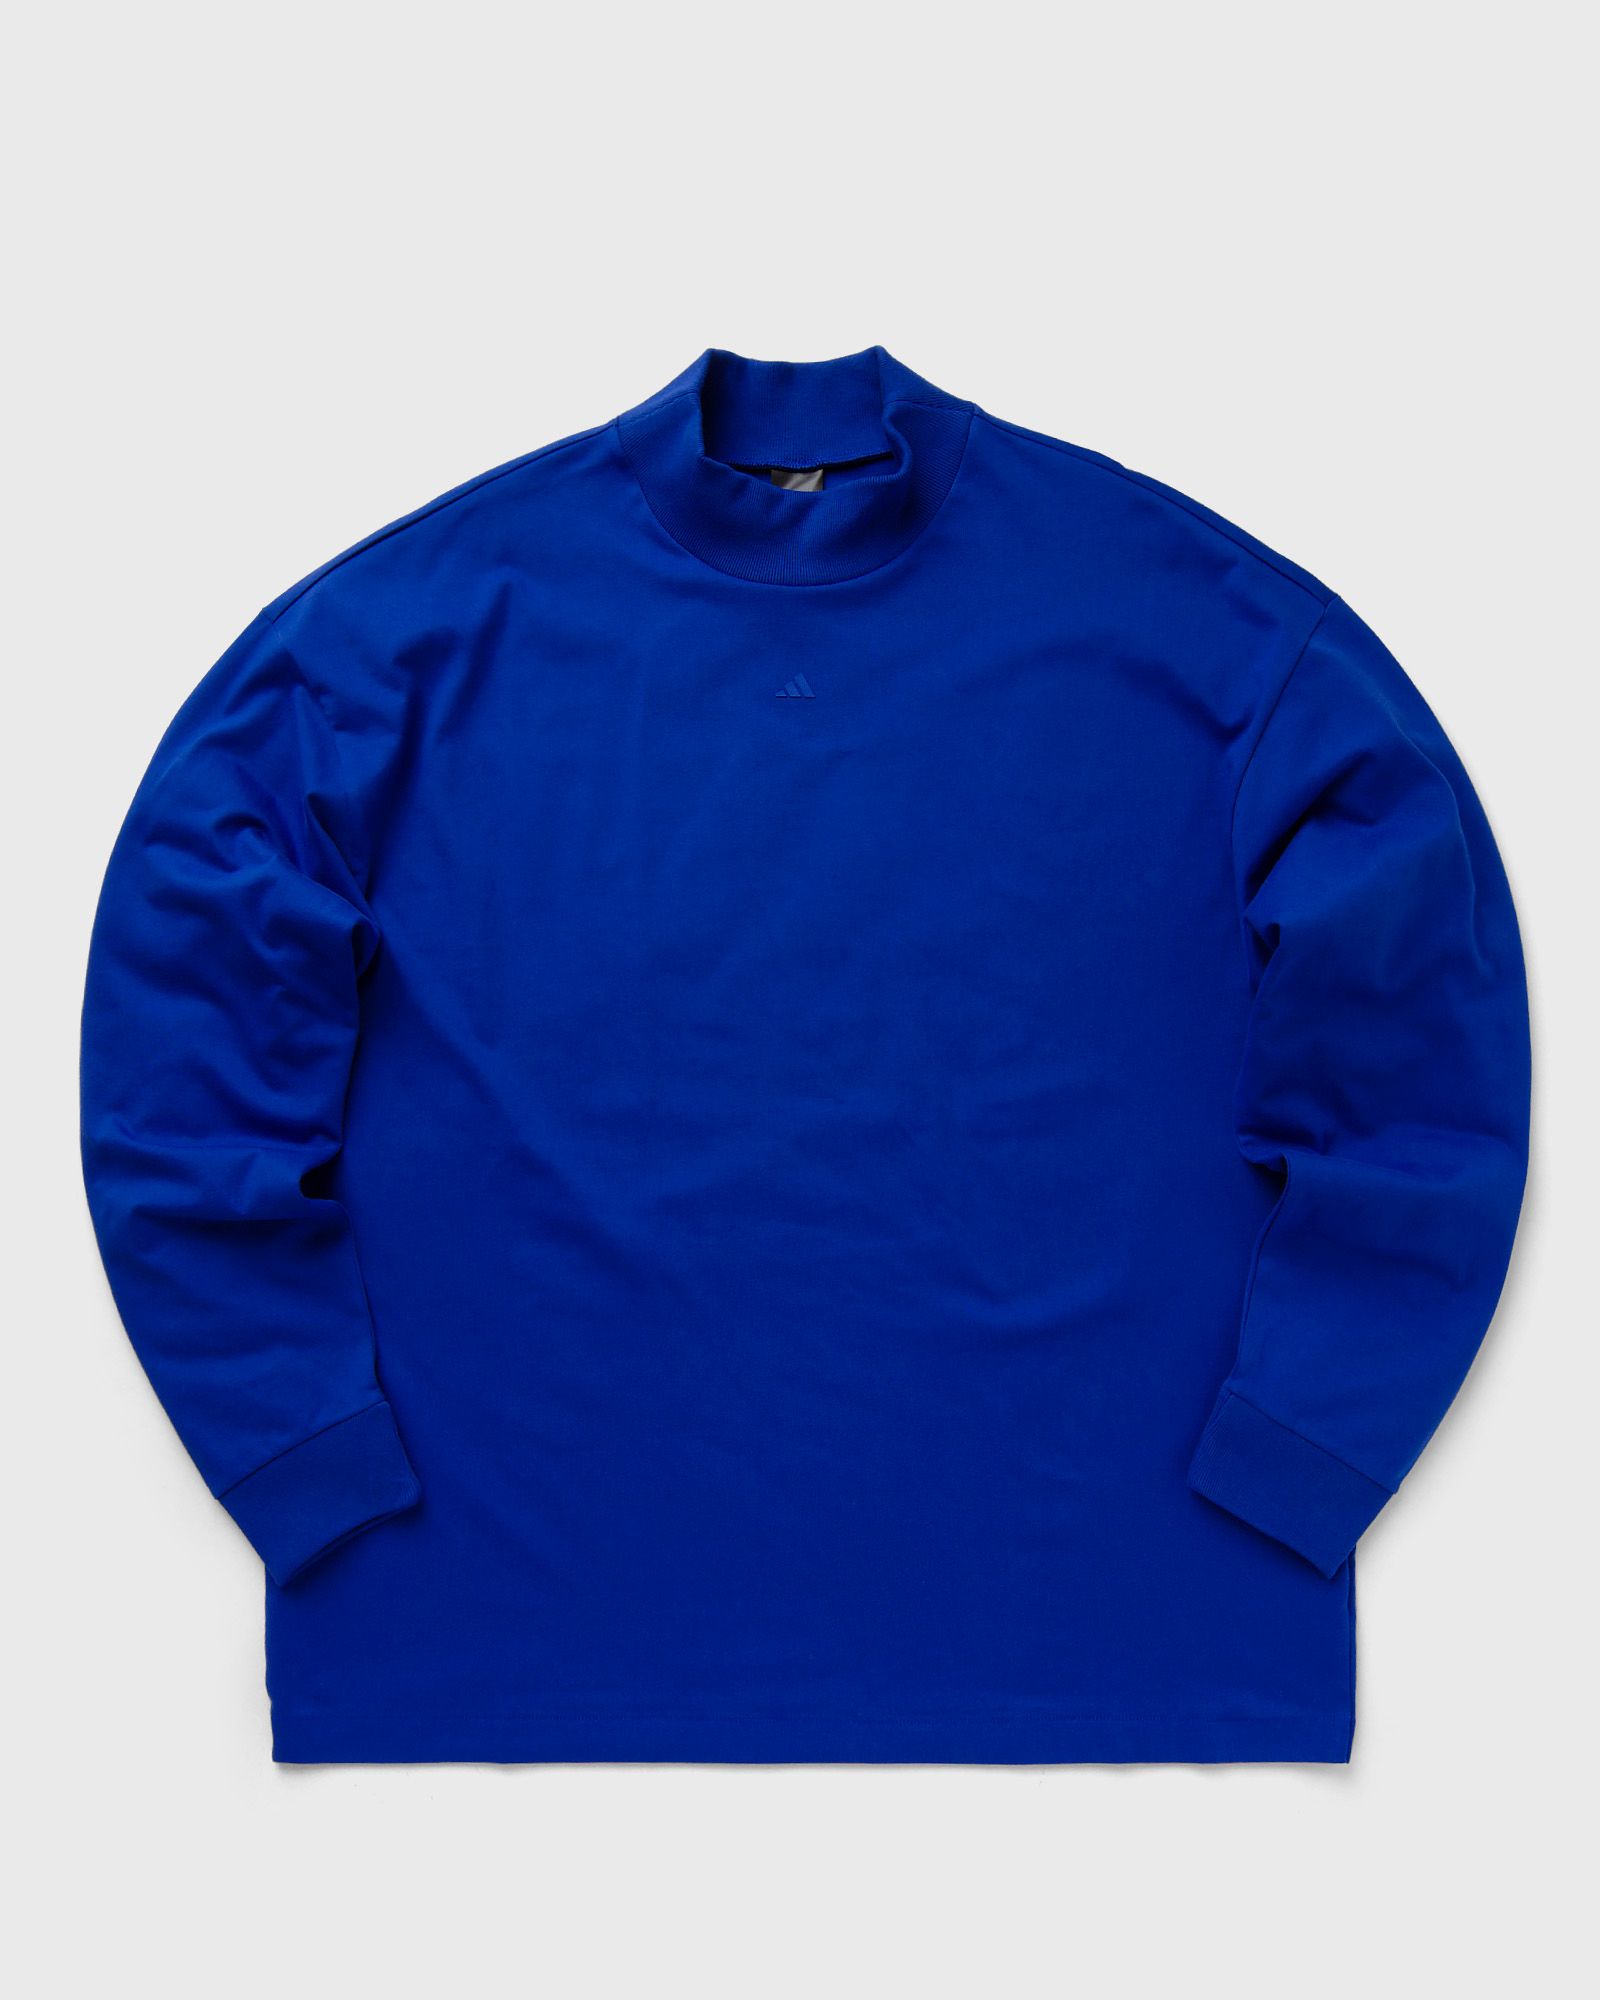 Adidas - one bb l/s tee men longsleeves blue in größe:l